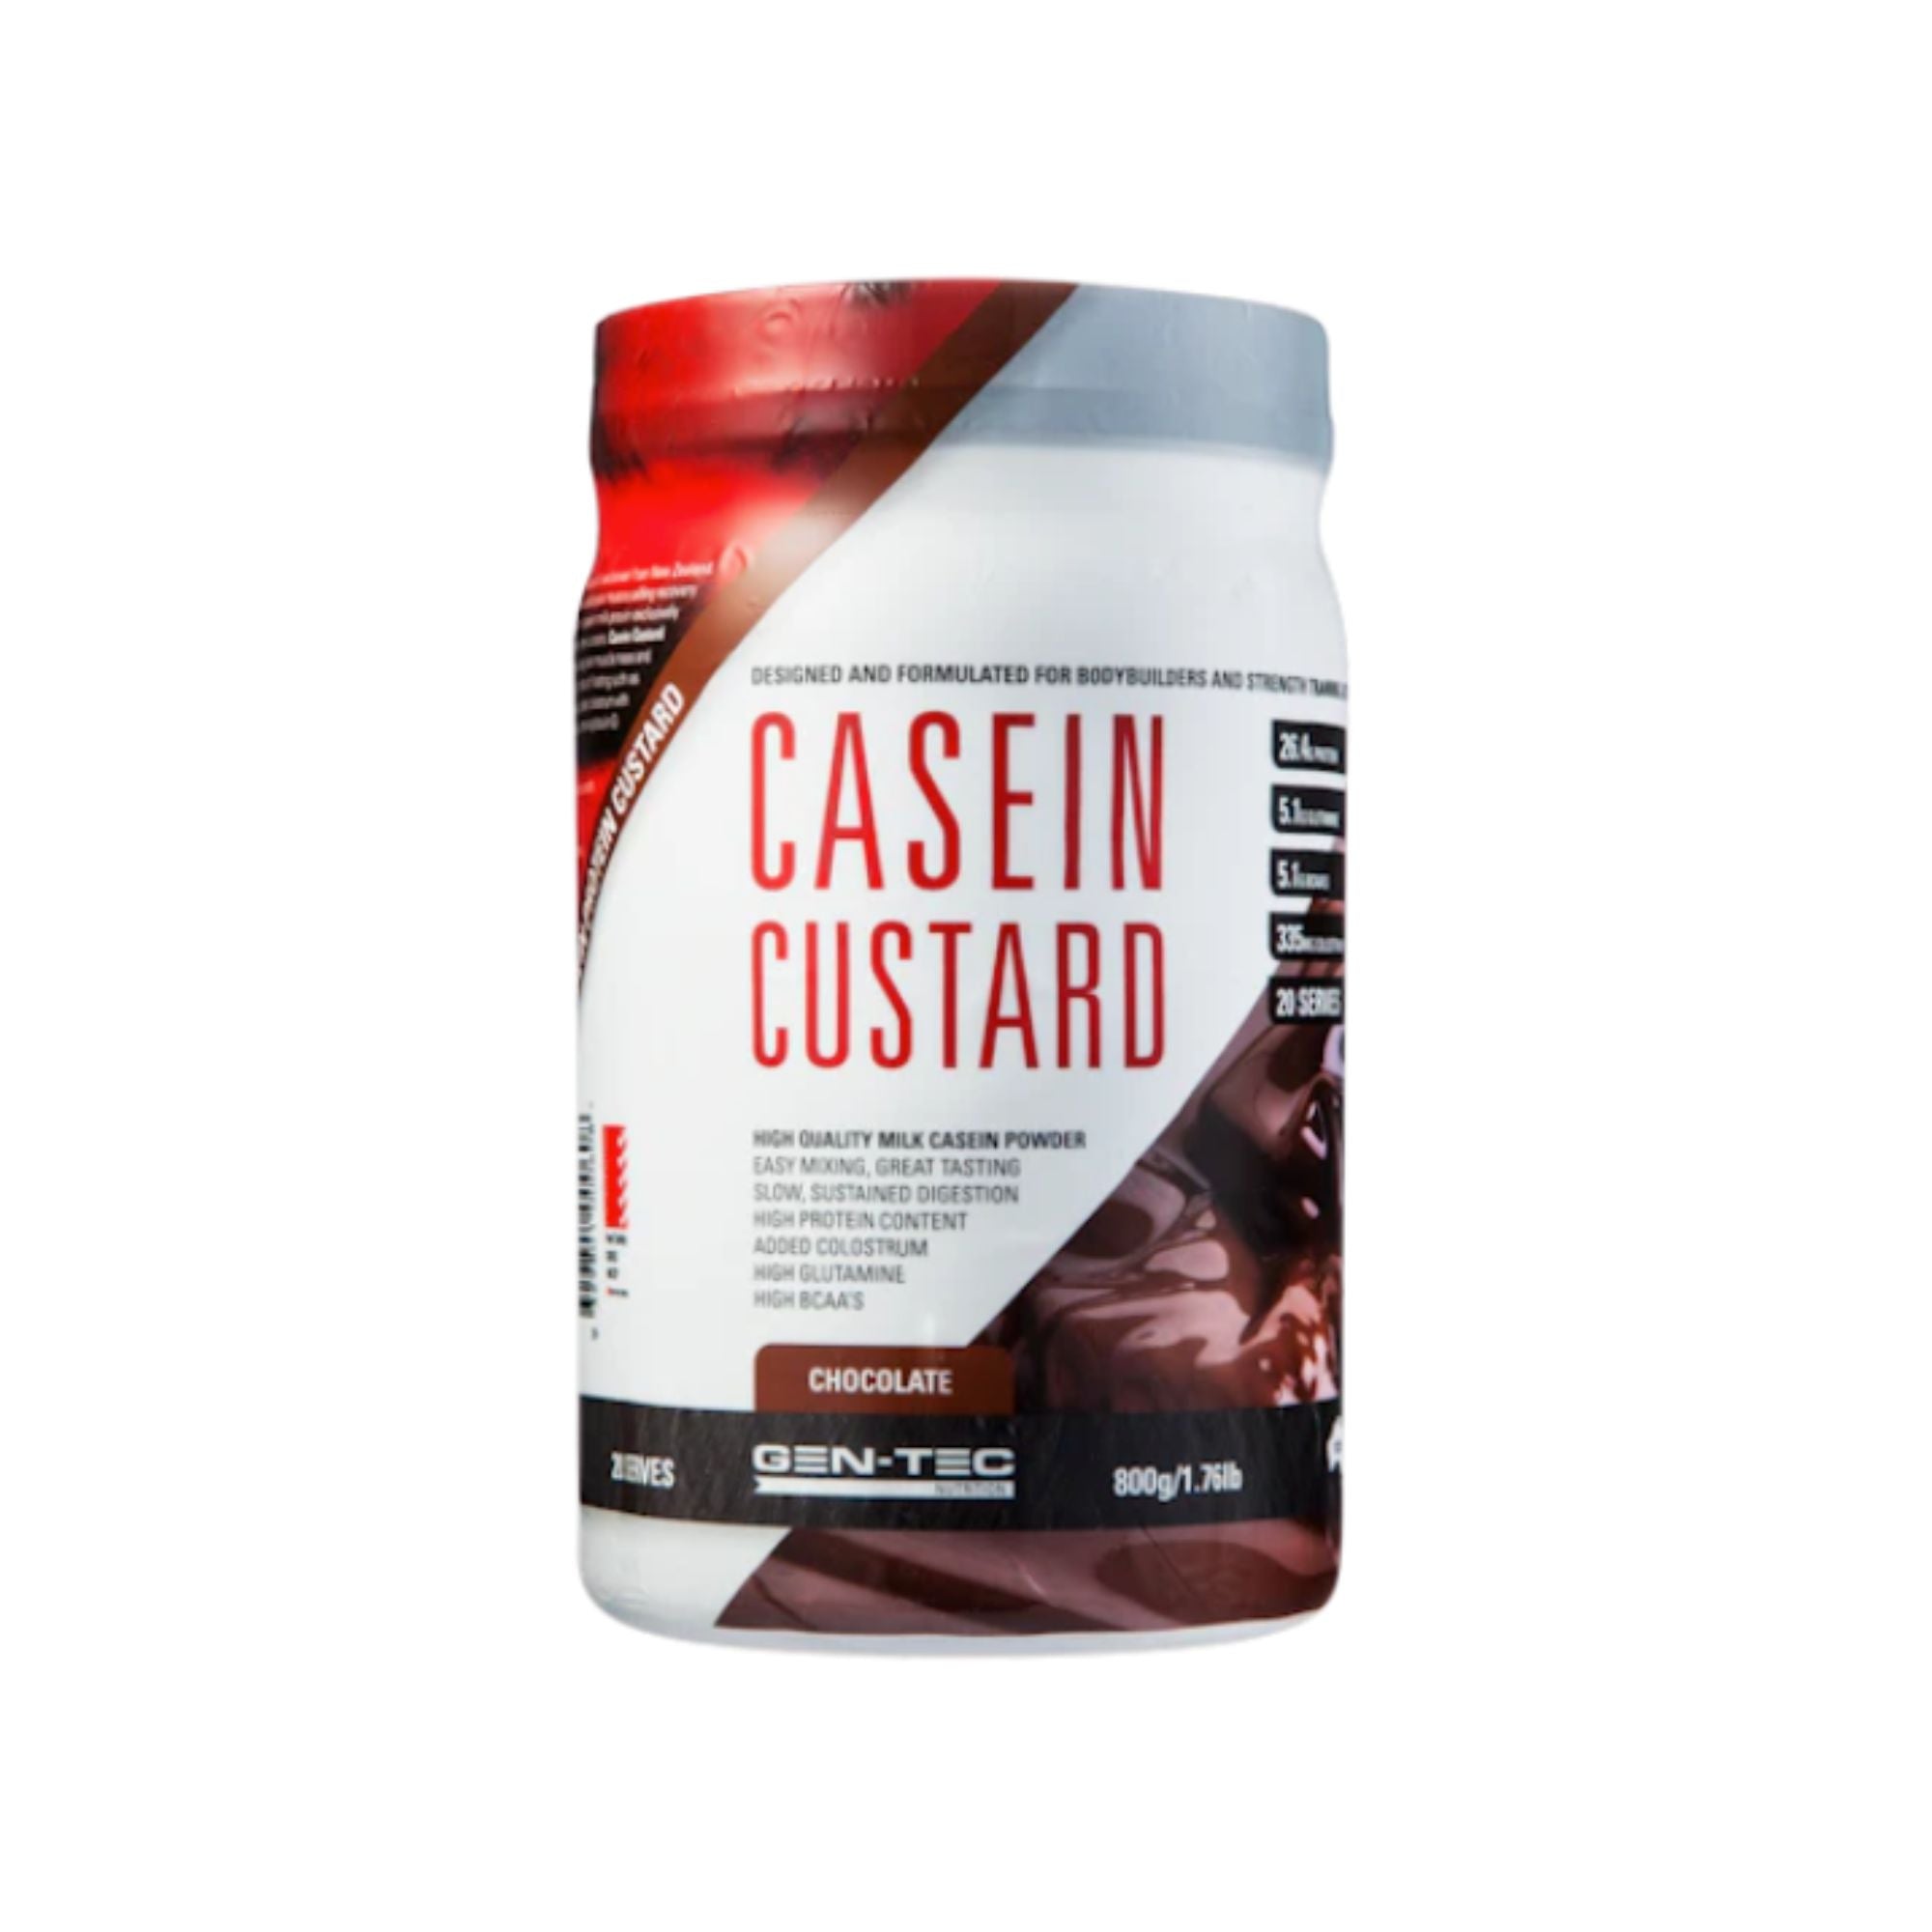 Gentec Casein Custard 800g Chocolate